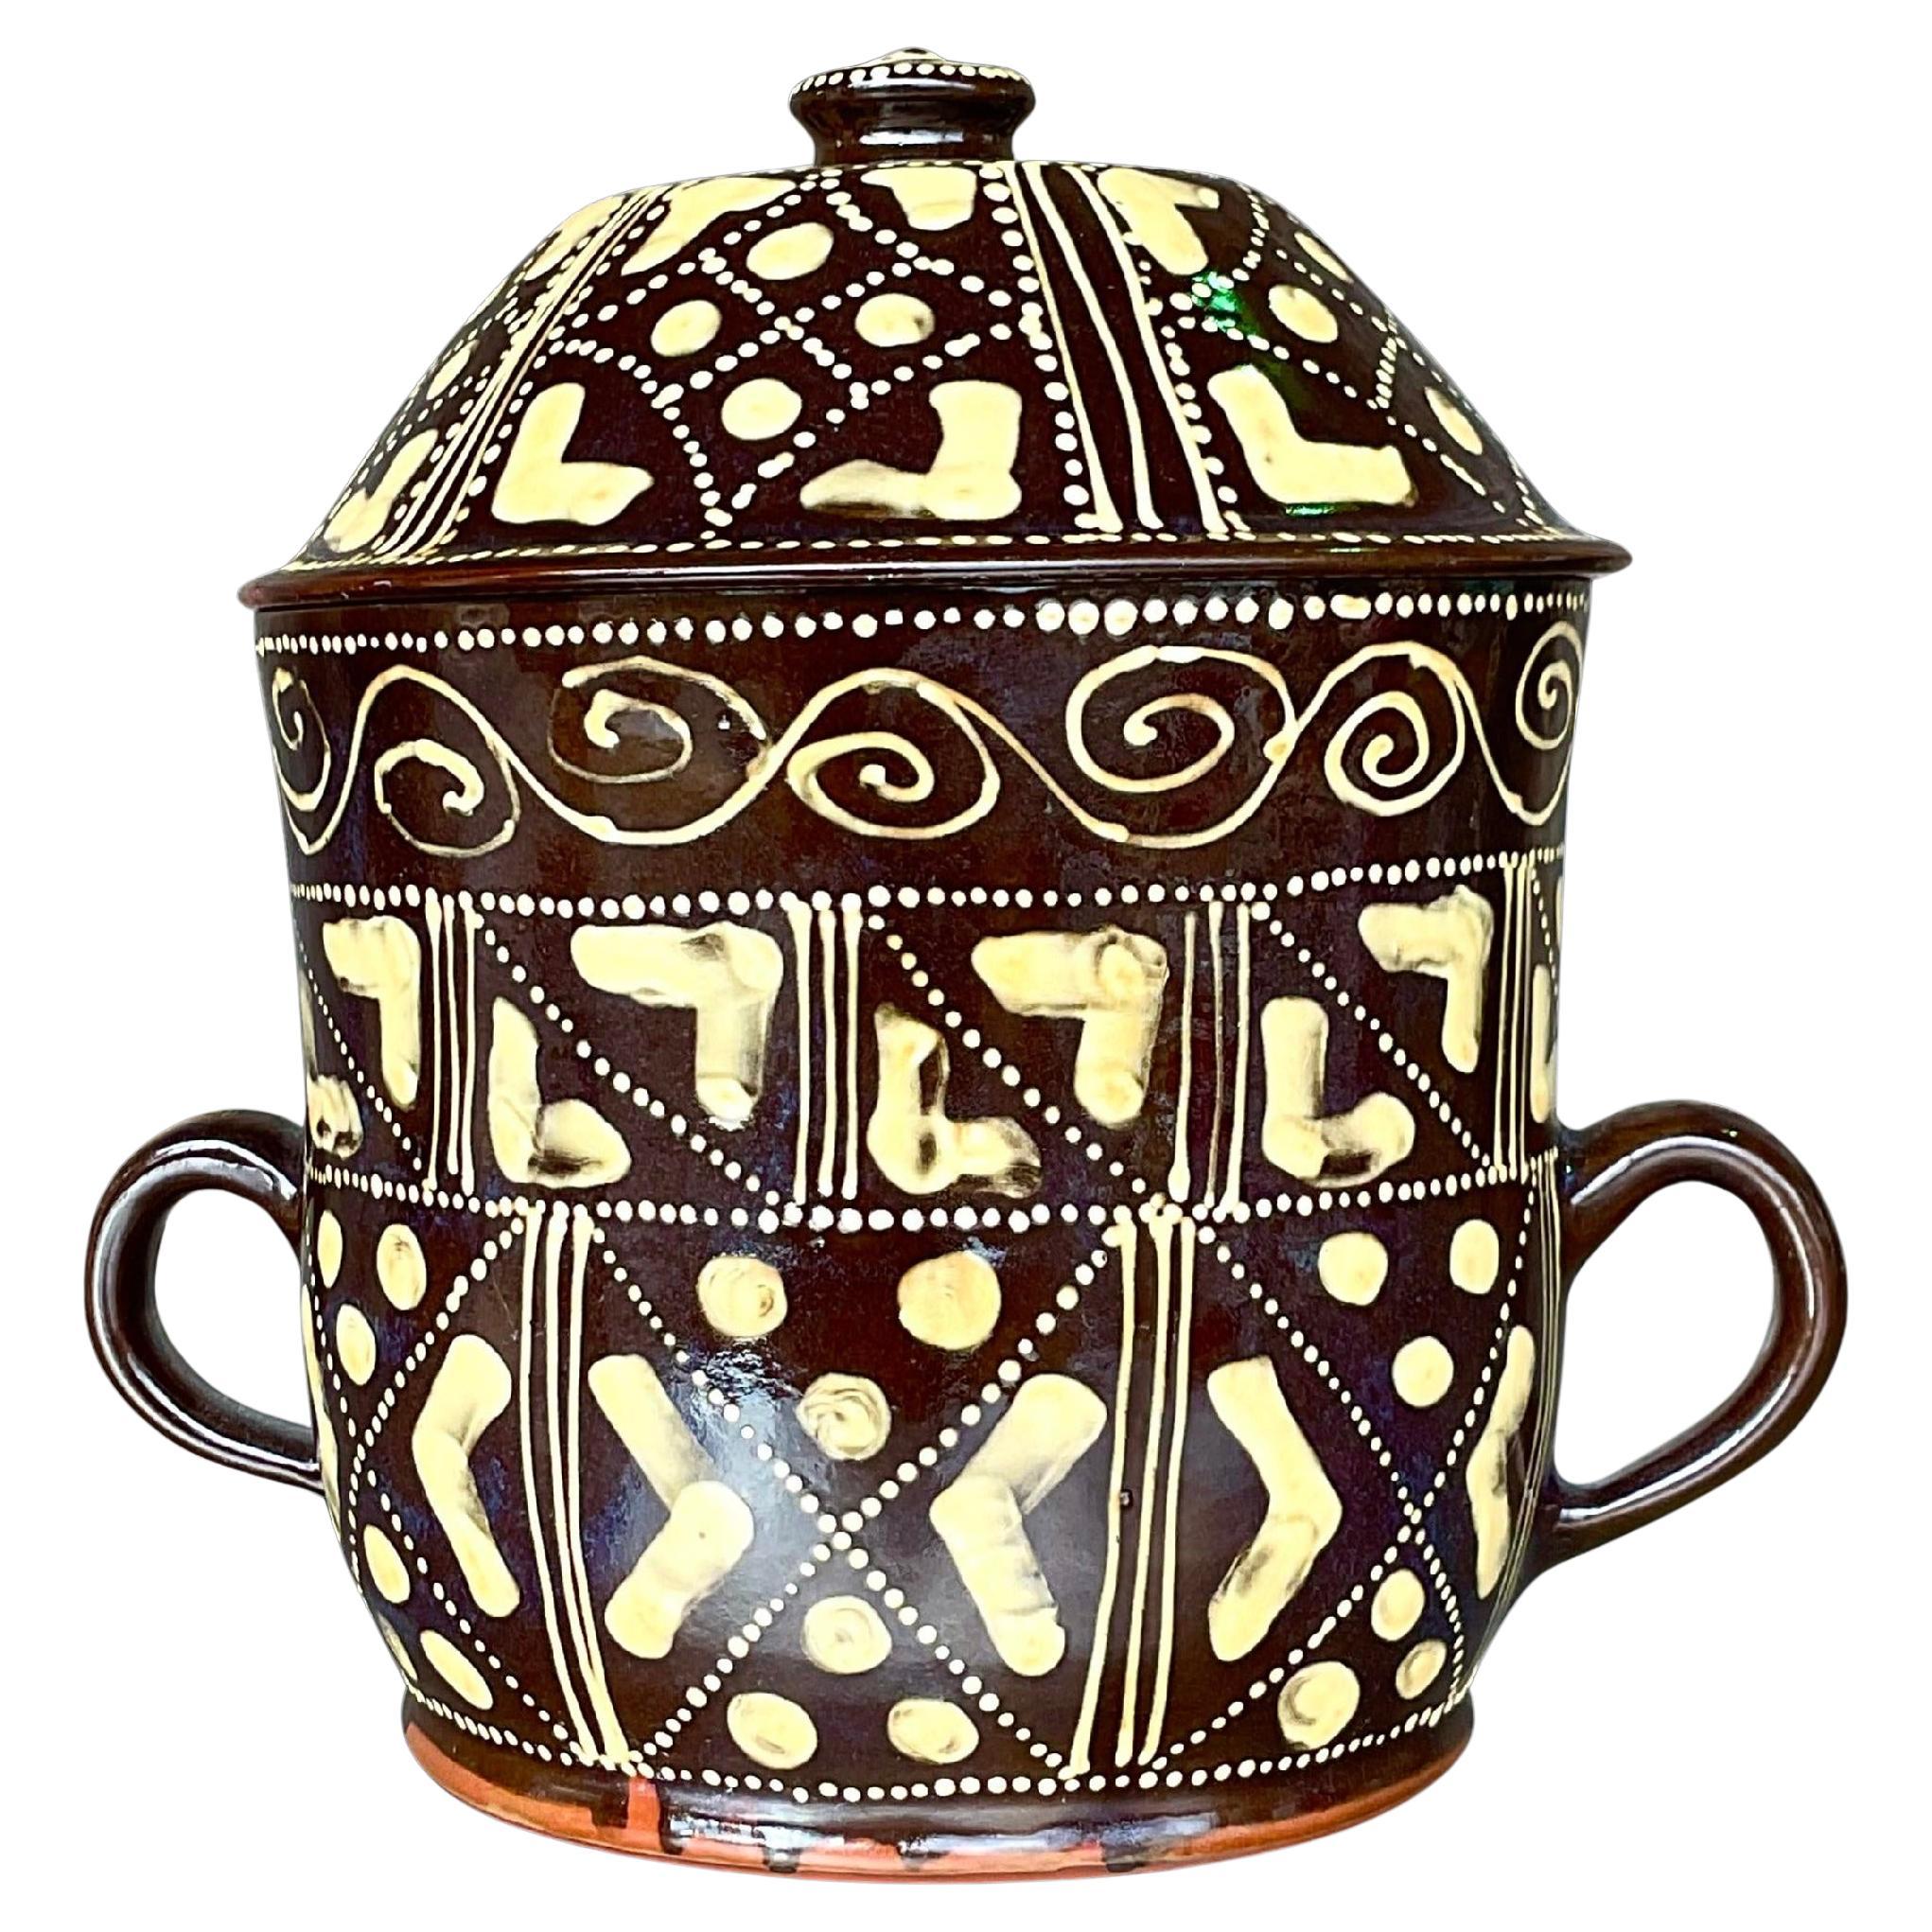 Handbemalter Vintage Boho Schokoladentopf aus Keramik